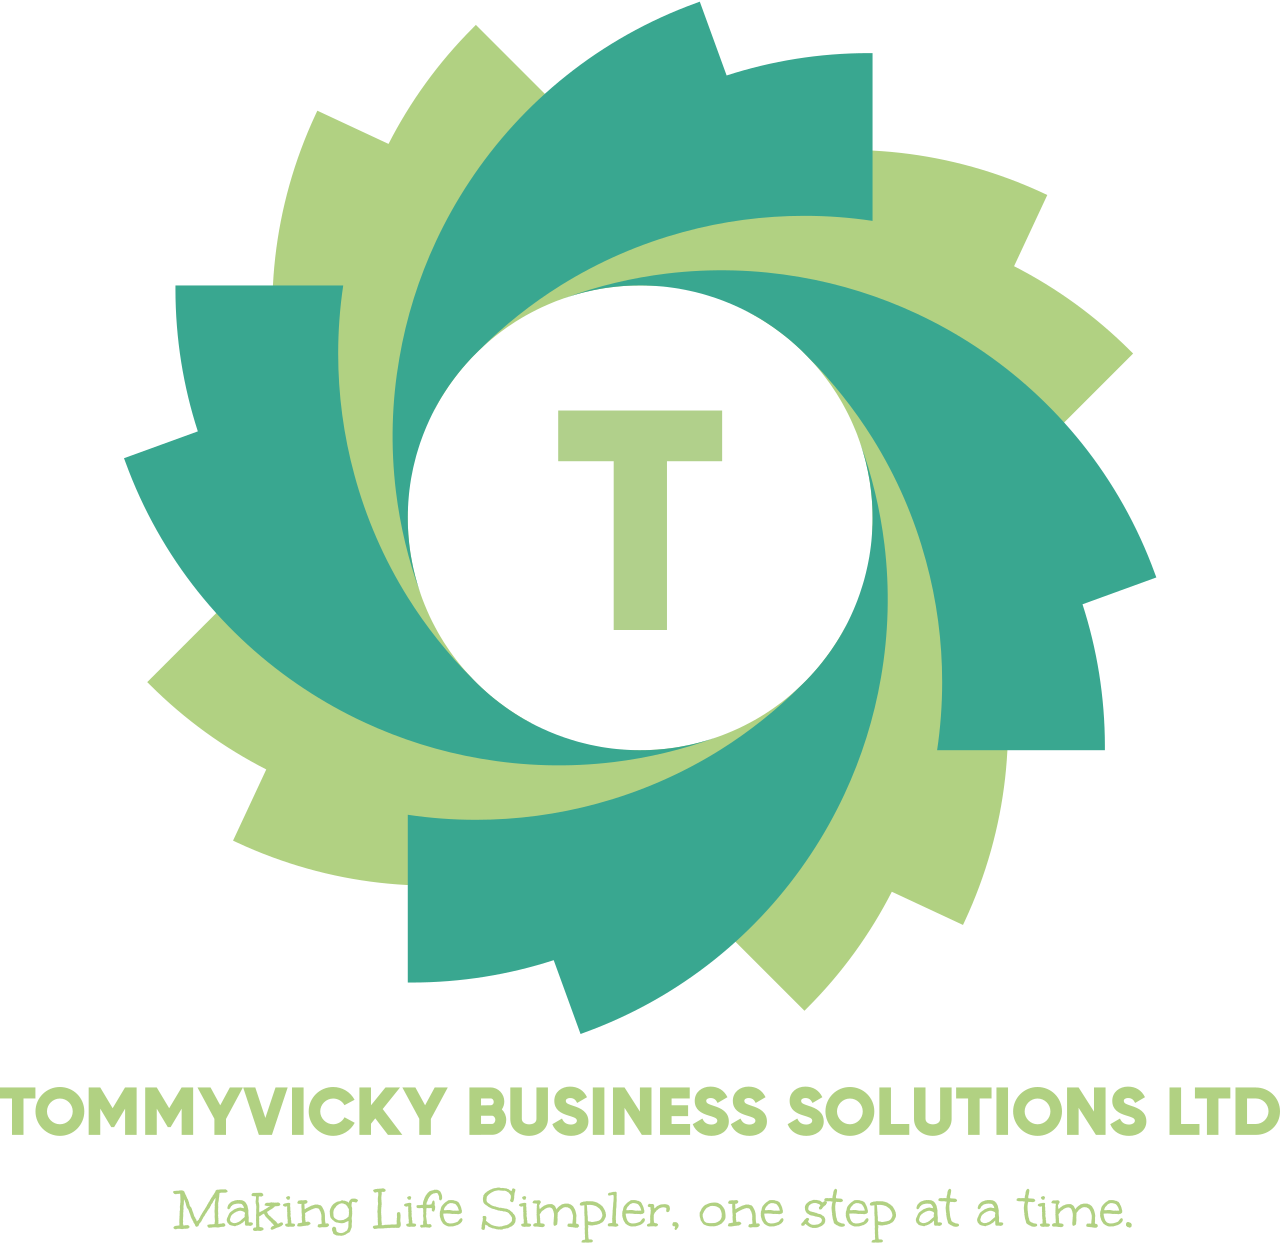 tommyvicky business solutions Ltd's web page